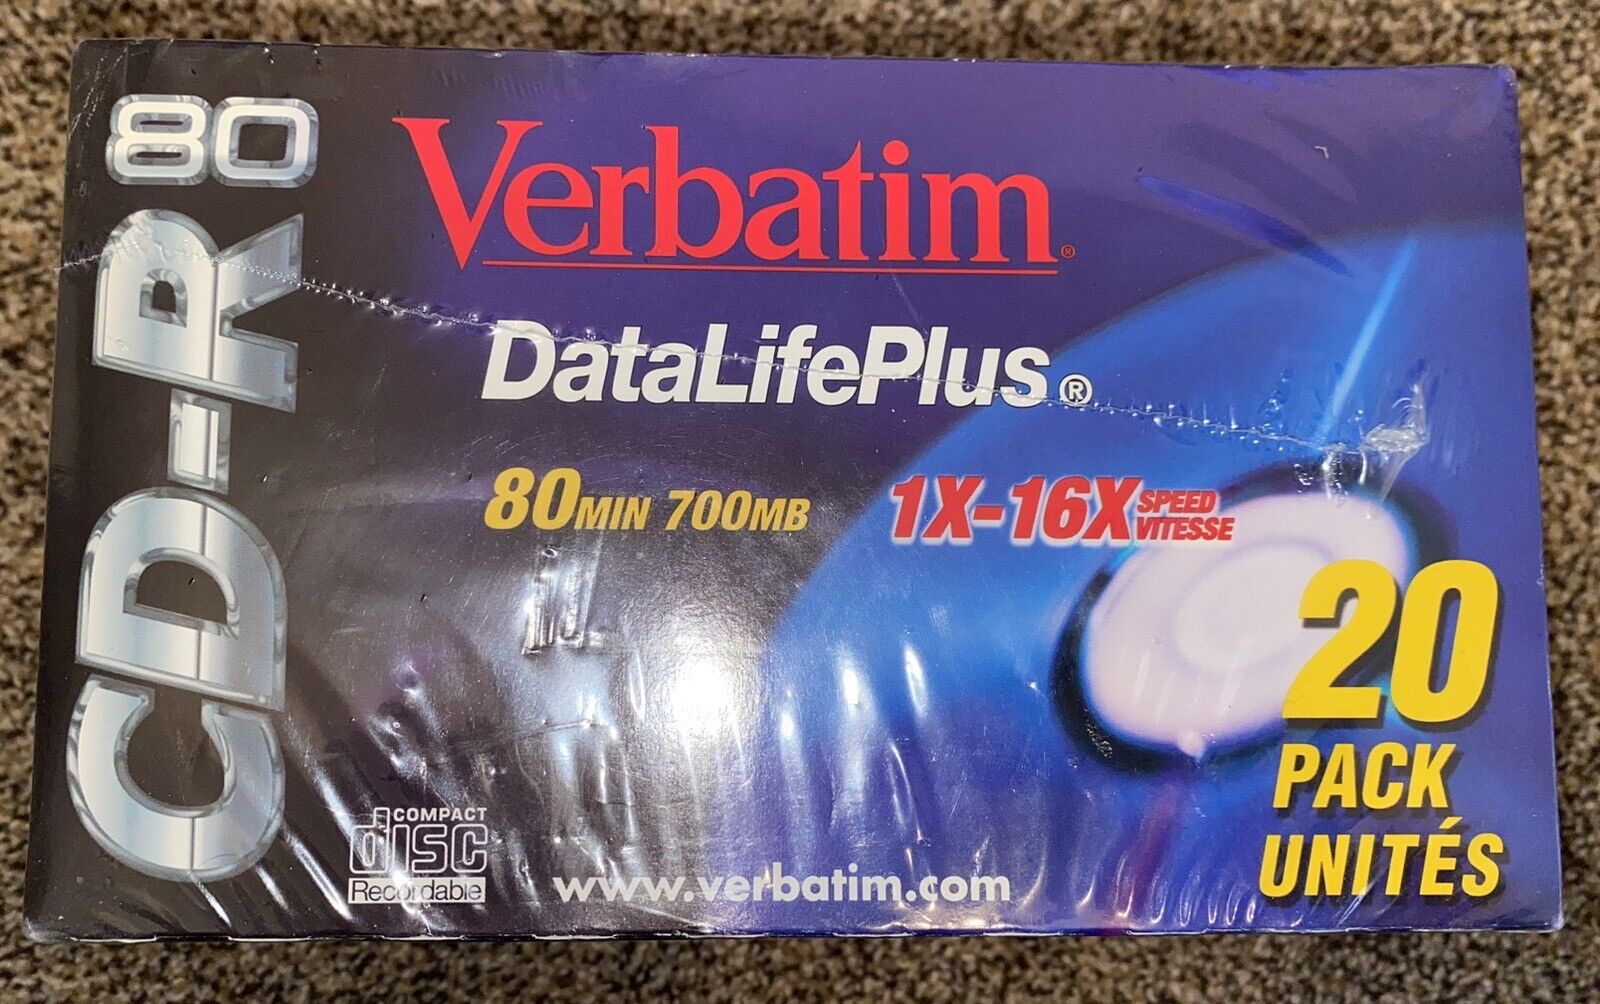 Verbatim Data Life Plus CD-R w/Cases Retail Pack of 20 Sealed 80 Min 700 MB VTG